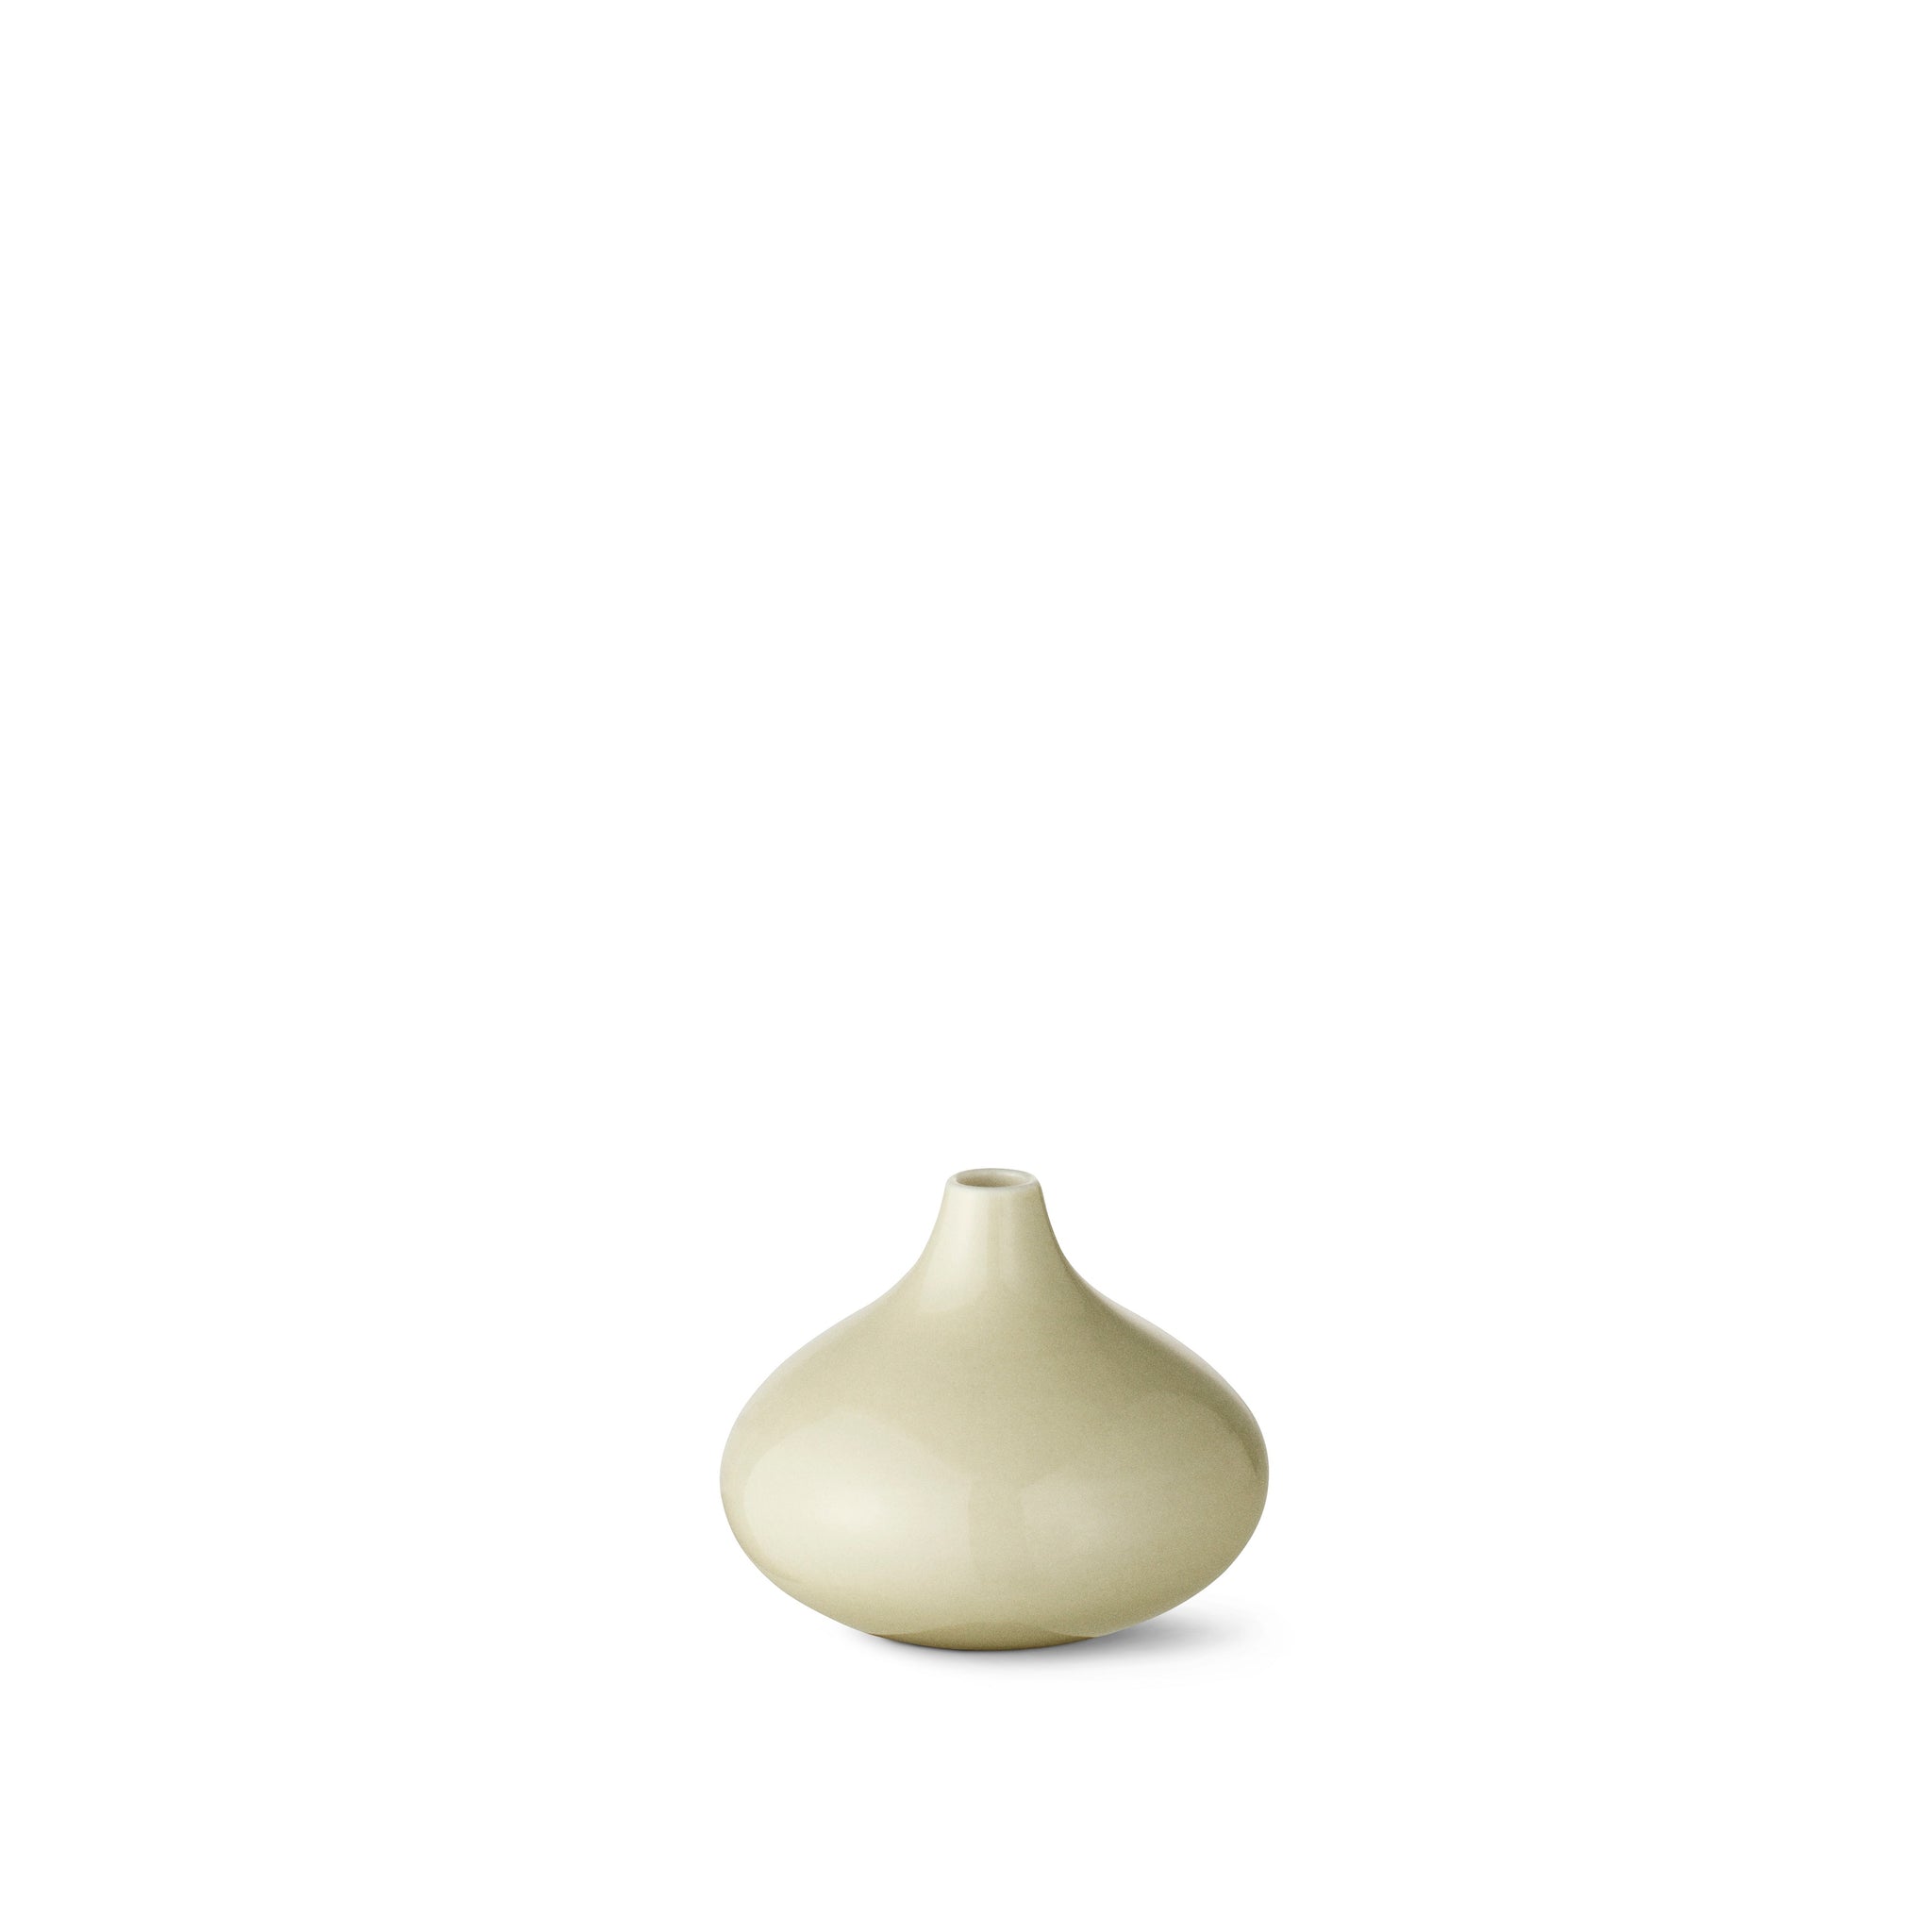 Contain Drop bud vase in artichoke